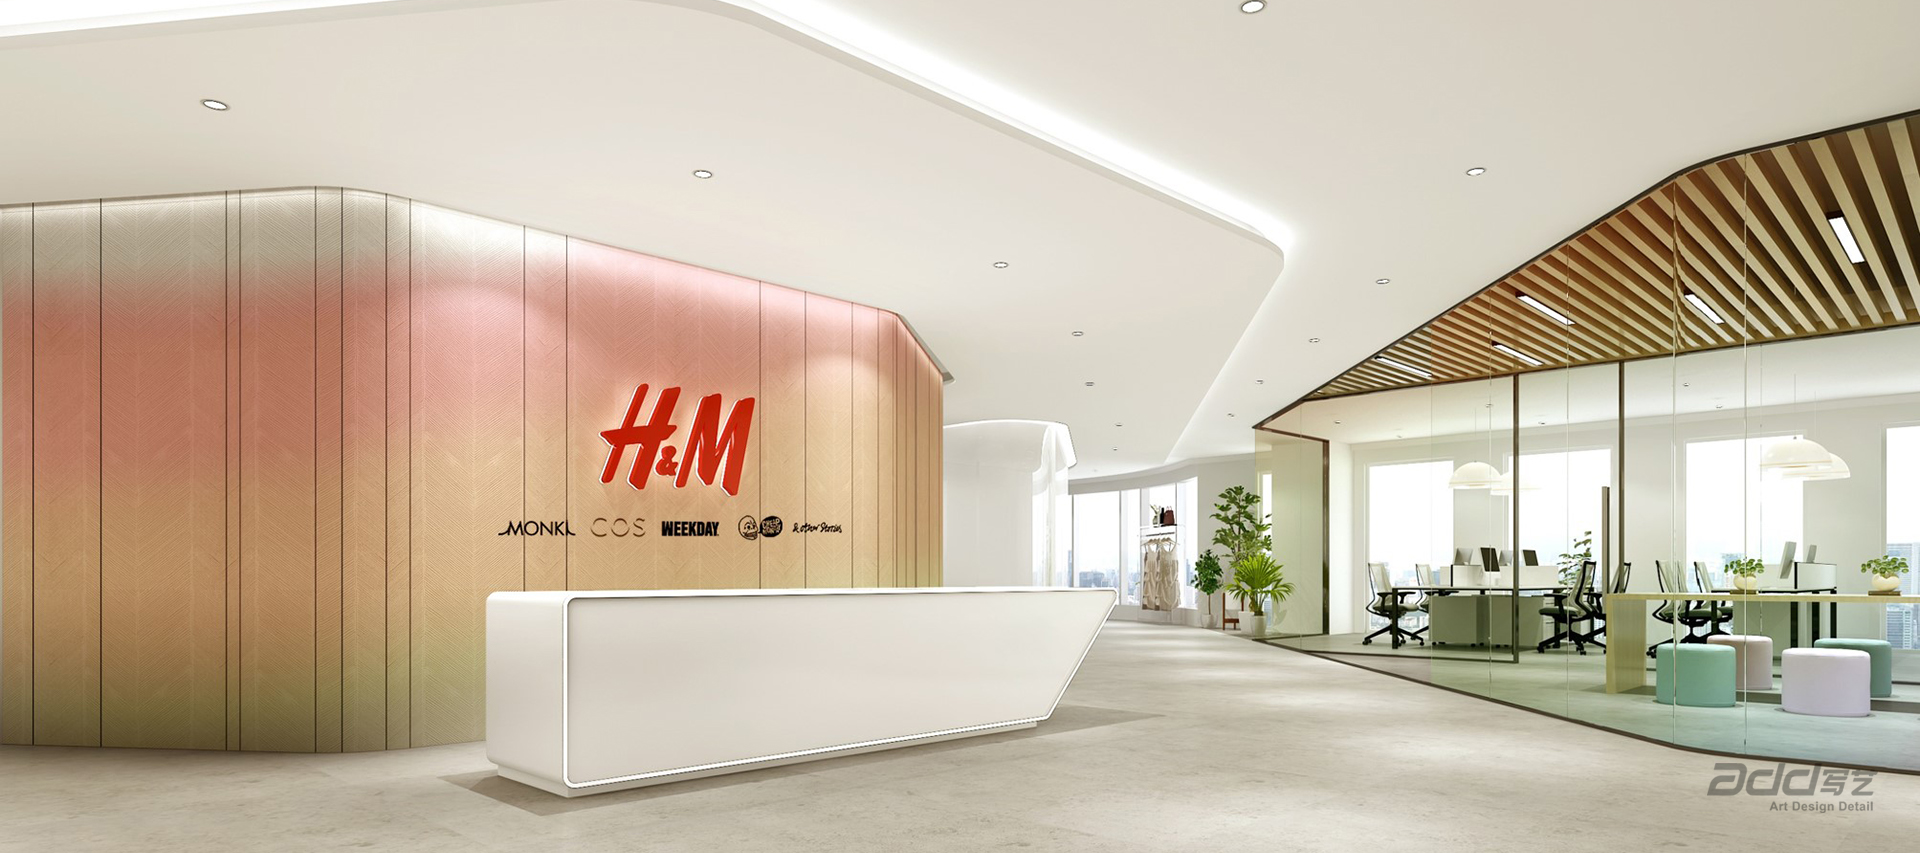 H&M辦公空間設計 前廳角度2-pc